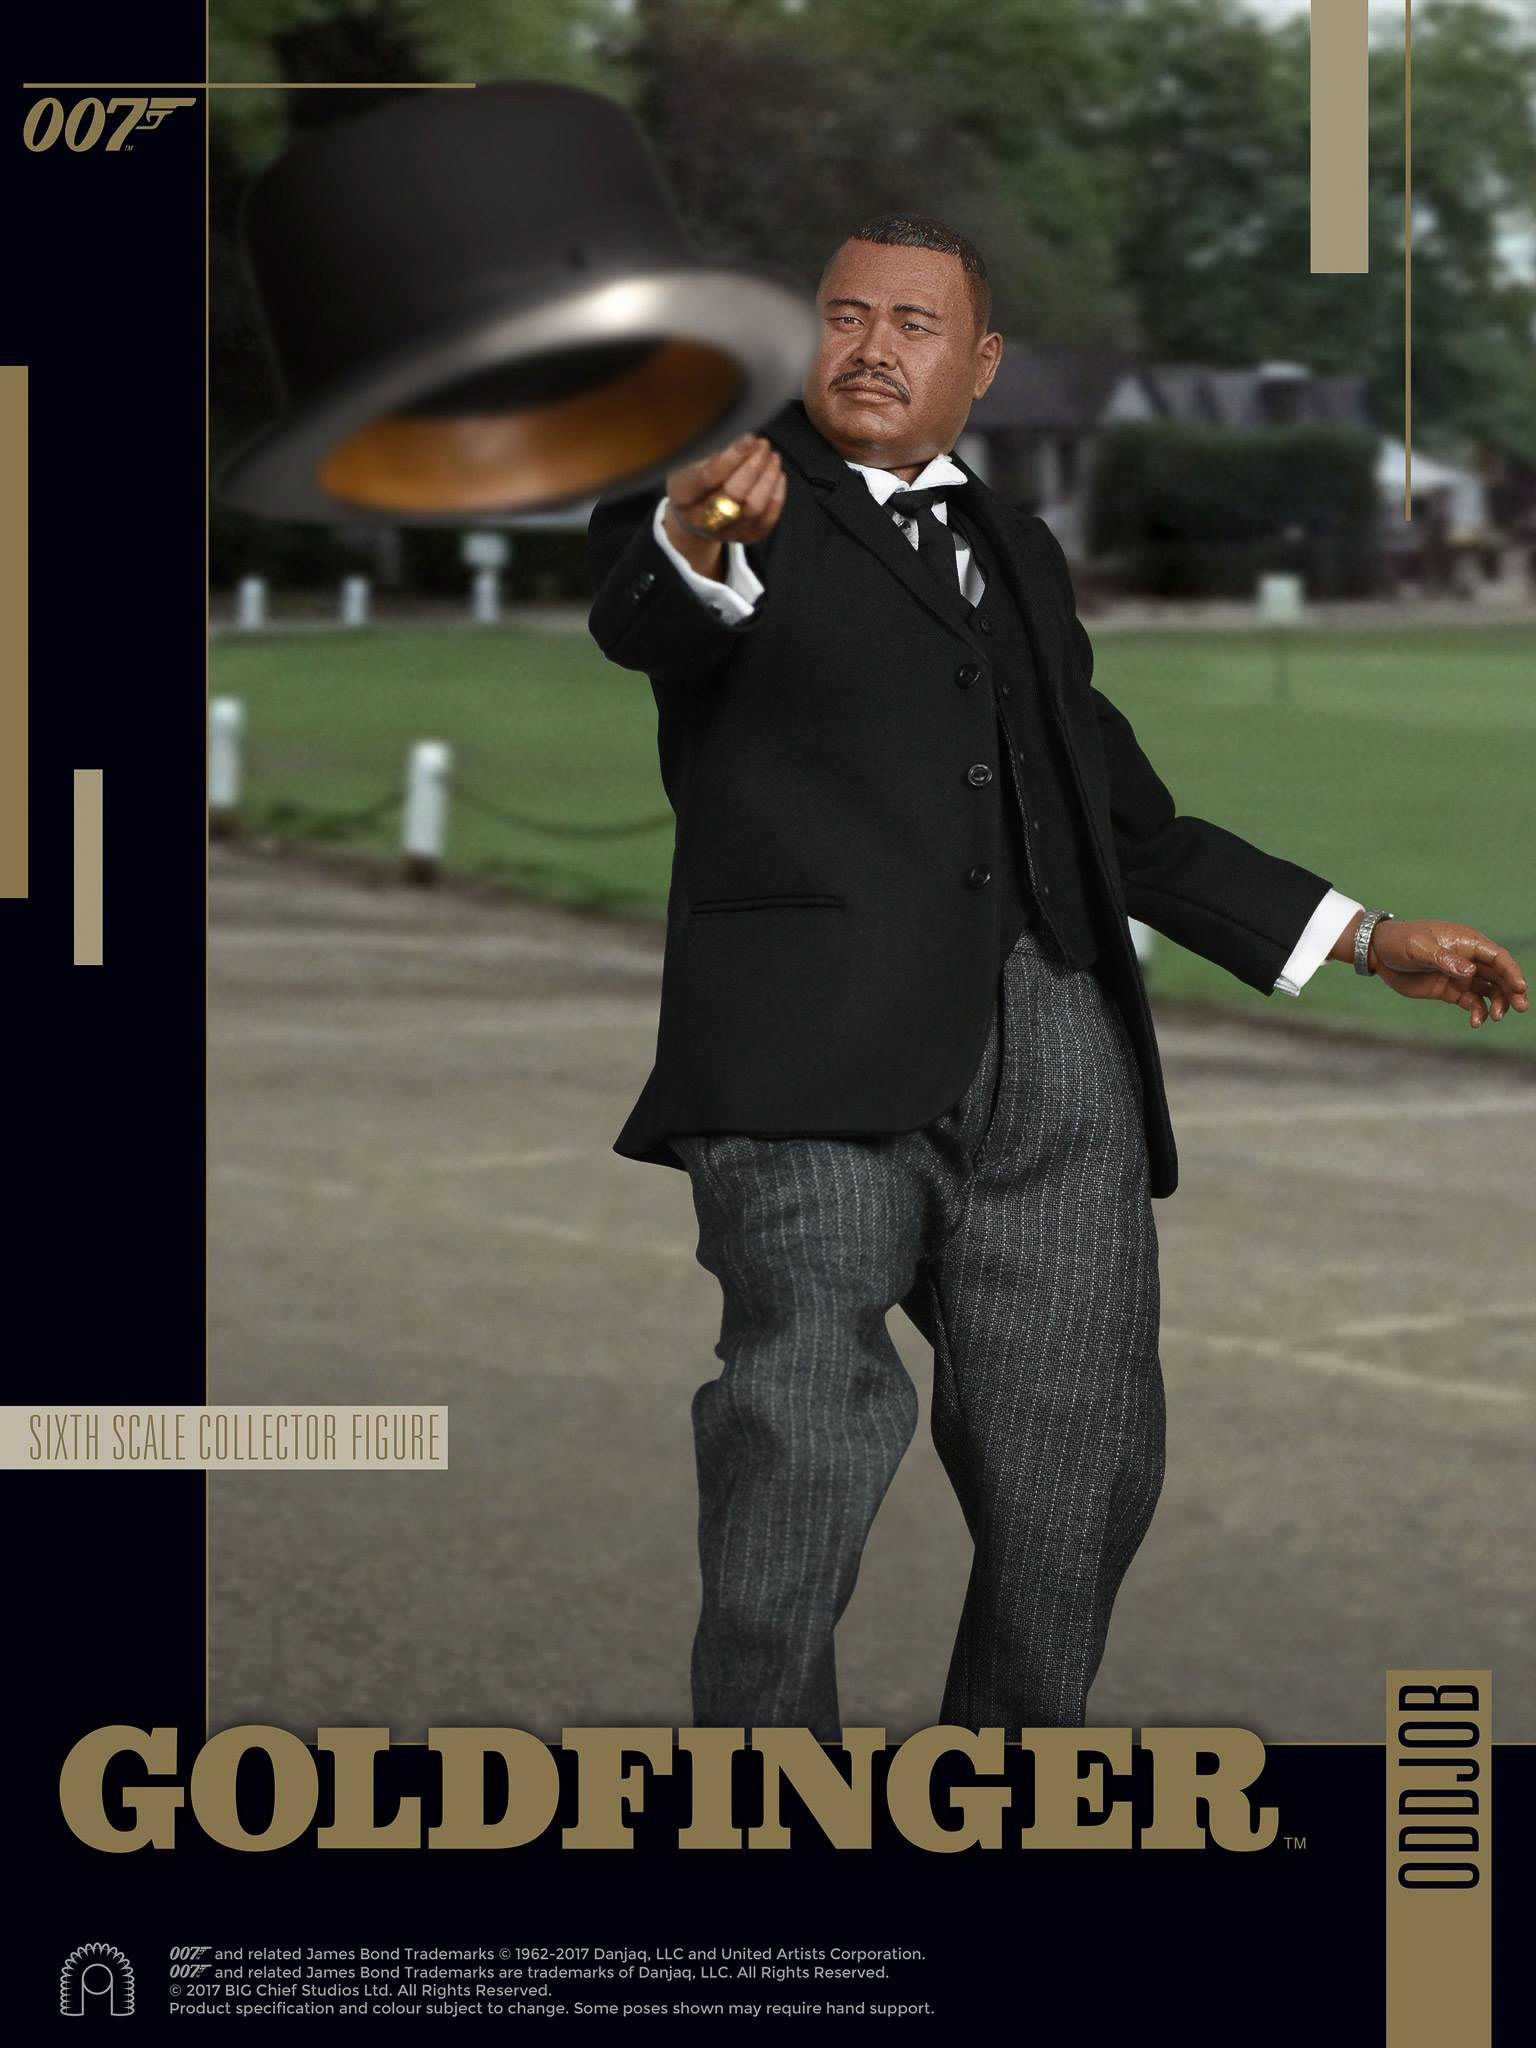 Big-Chief-James-Bond-Goldfinger-Oddjob-Full-Reveal-035.jpg